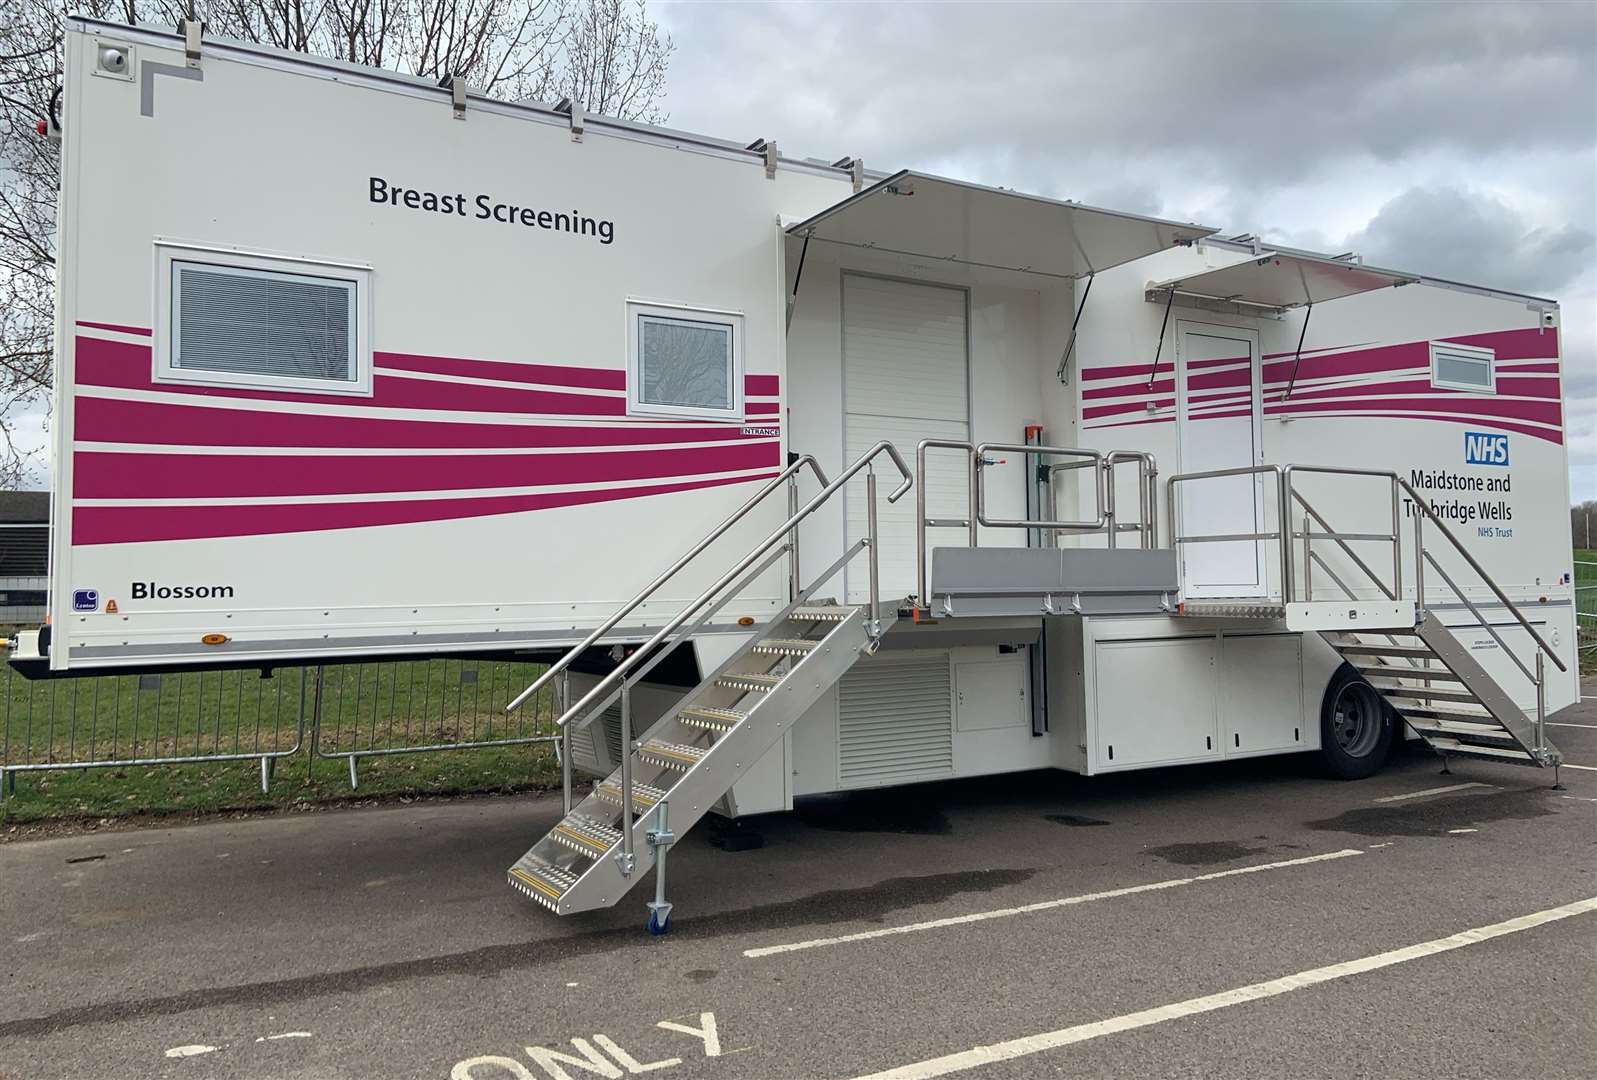 A breast screening unit belonging to Maidstone and Tunbridge Wells NHS Trust